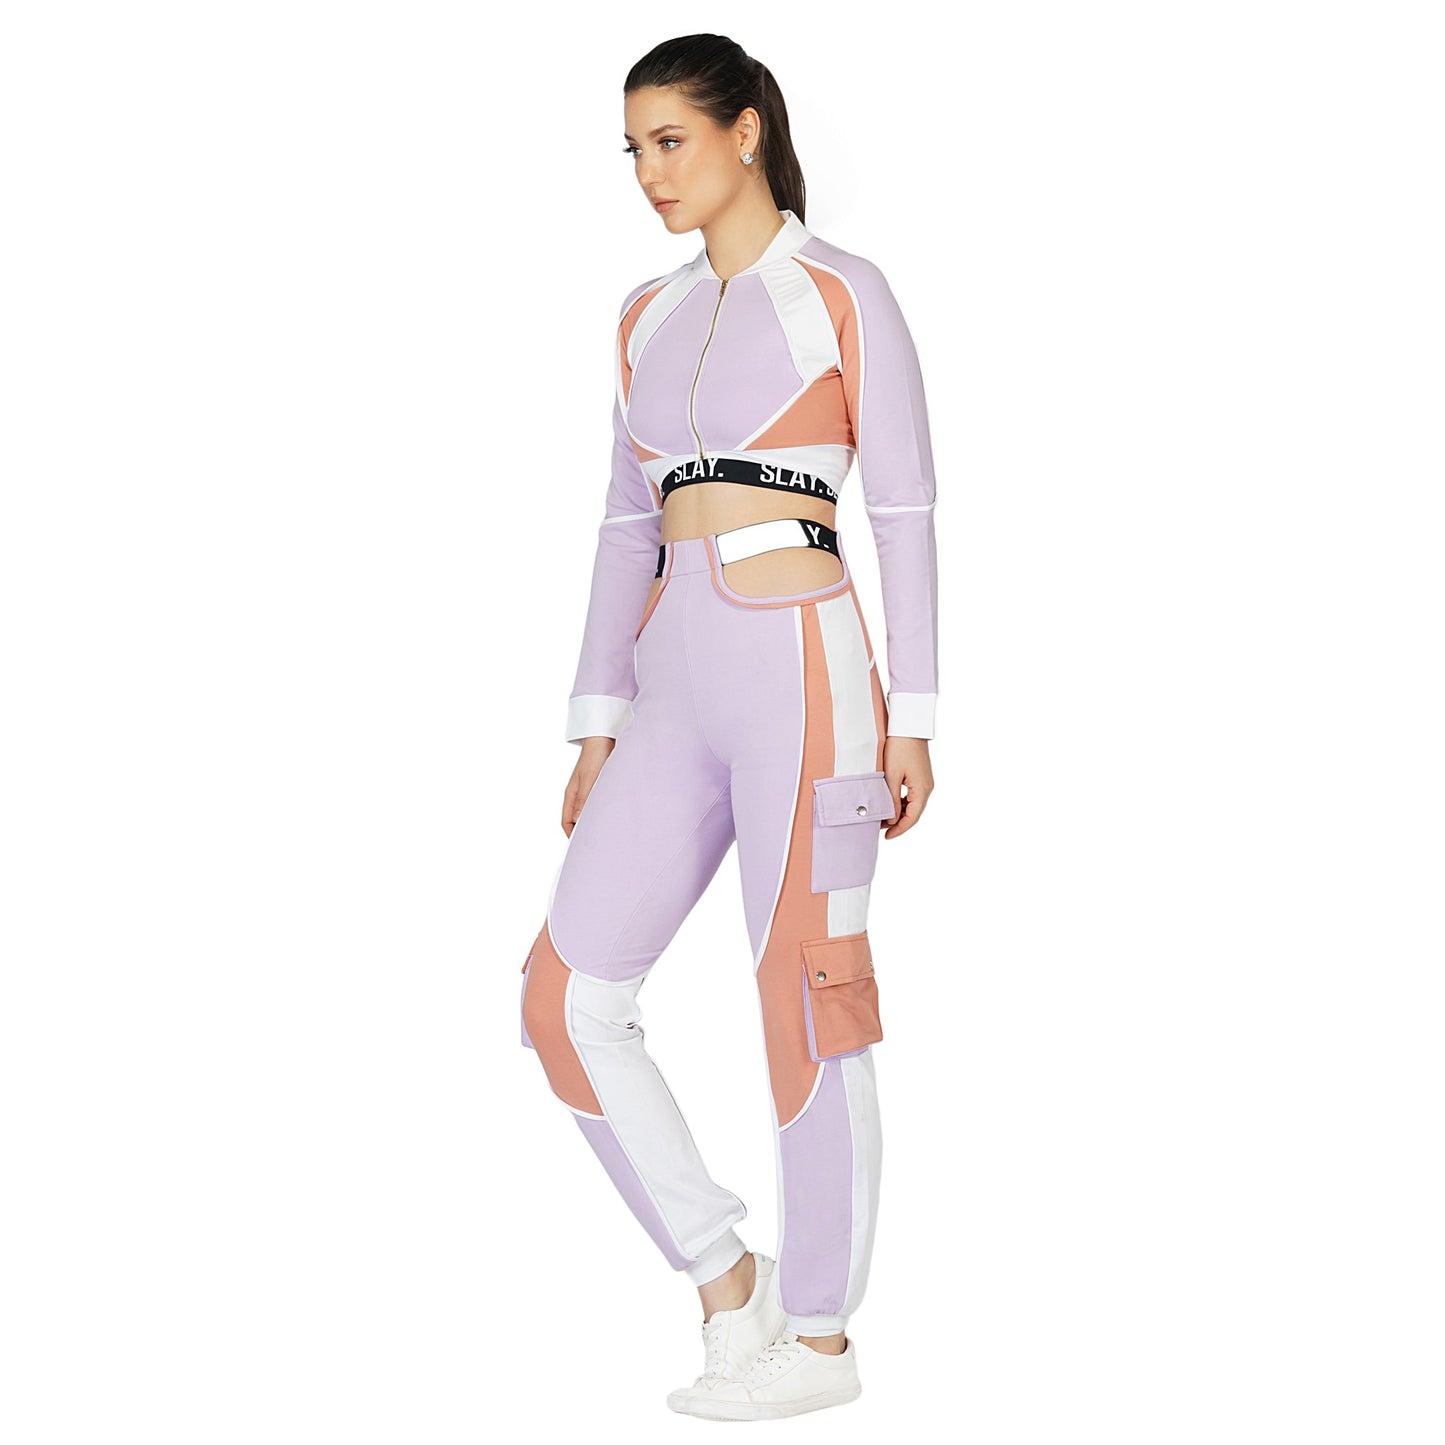 SLAY. Women's Crop Jacket Lavender Lilac Nude White Colorblock - Activewear Streetwear